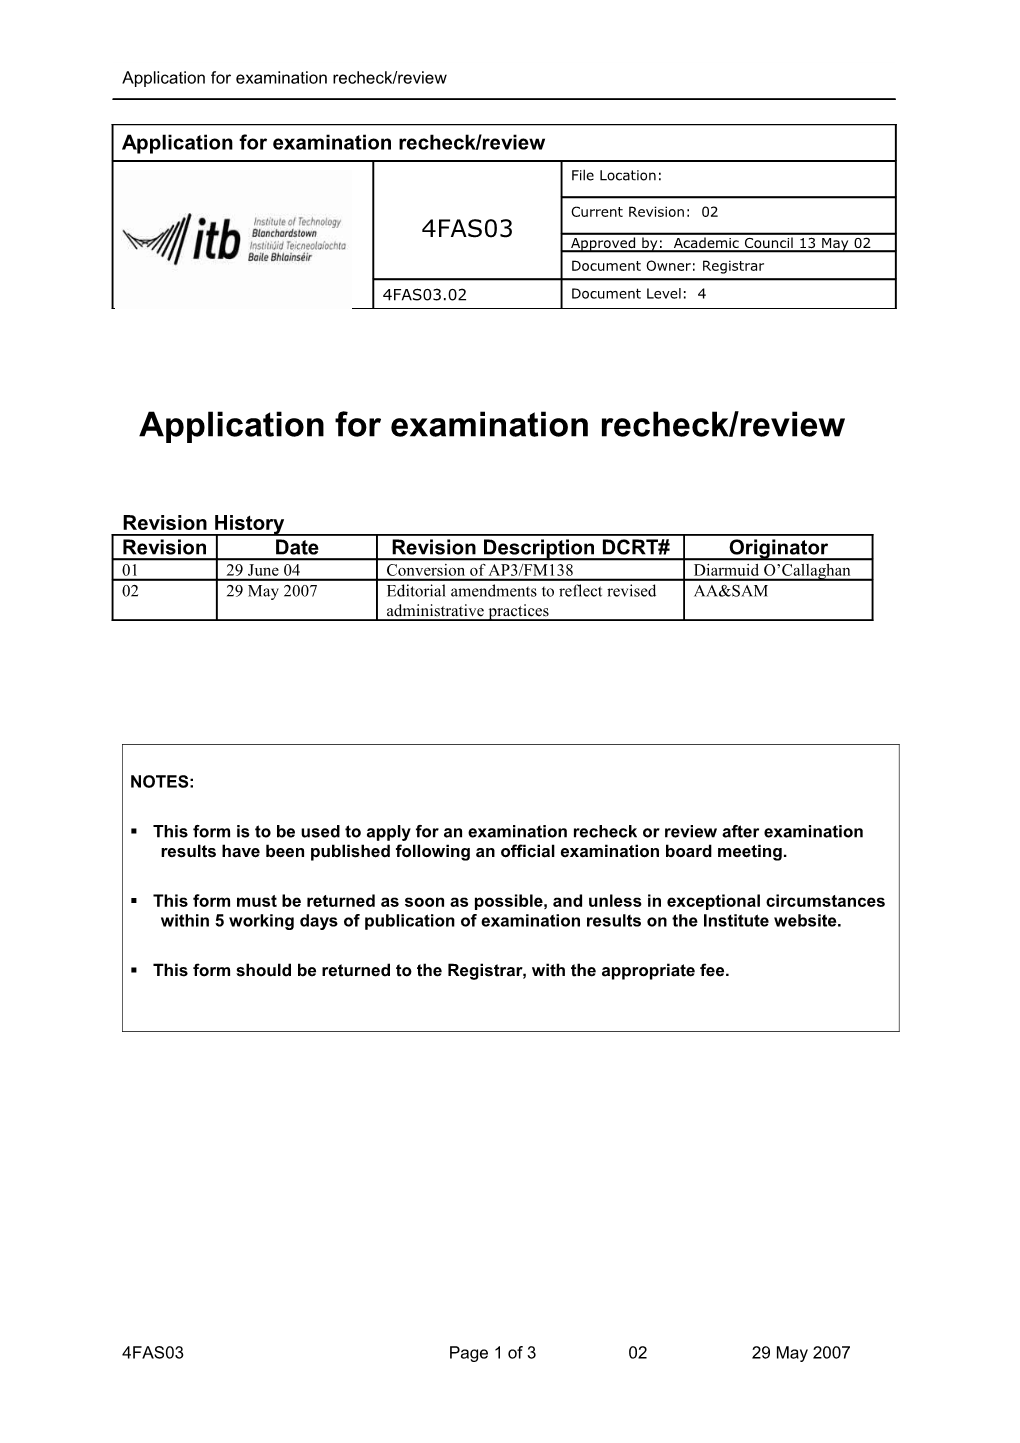 Application for Examination Recheck/Review